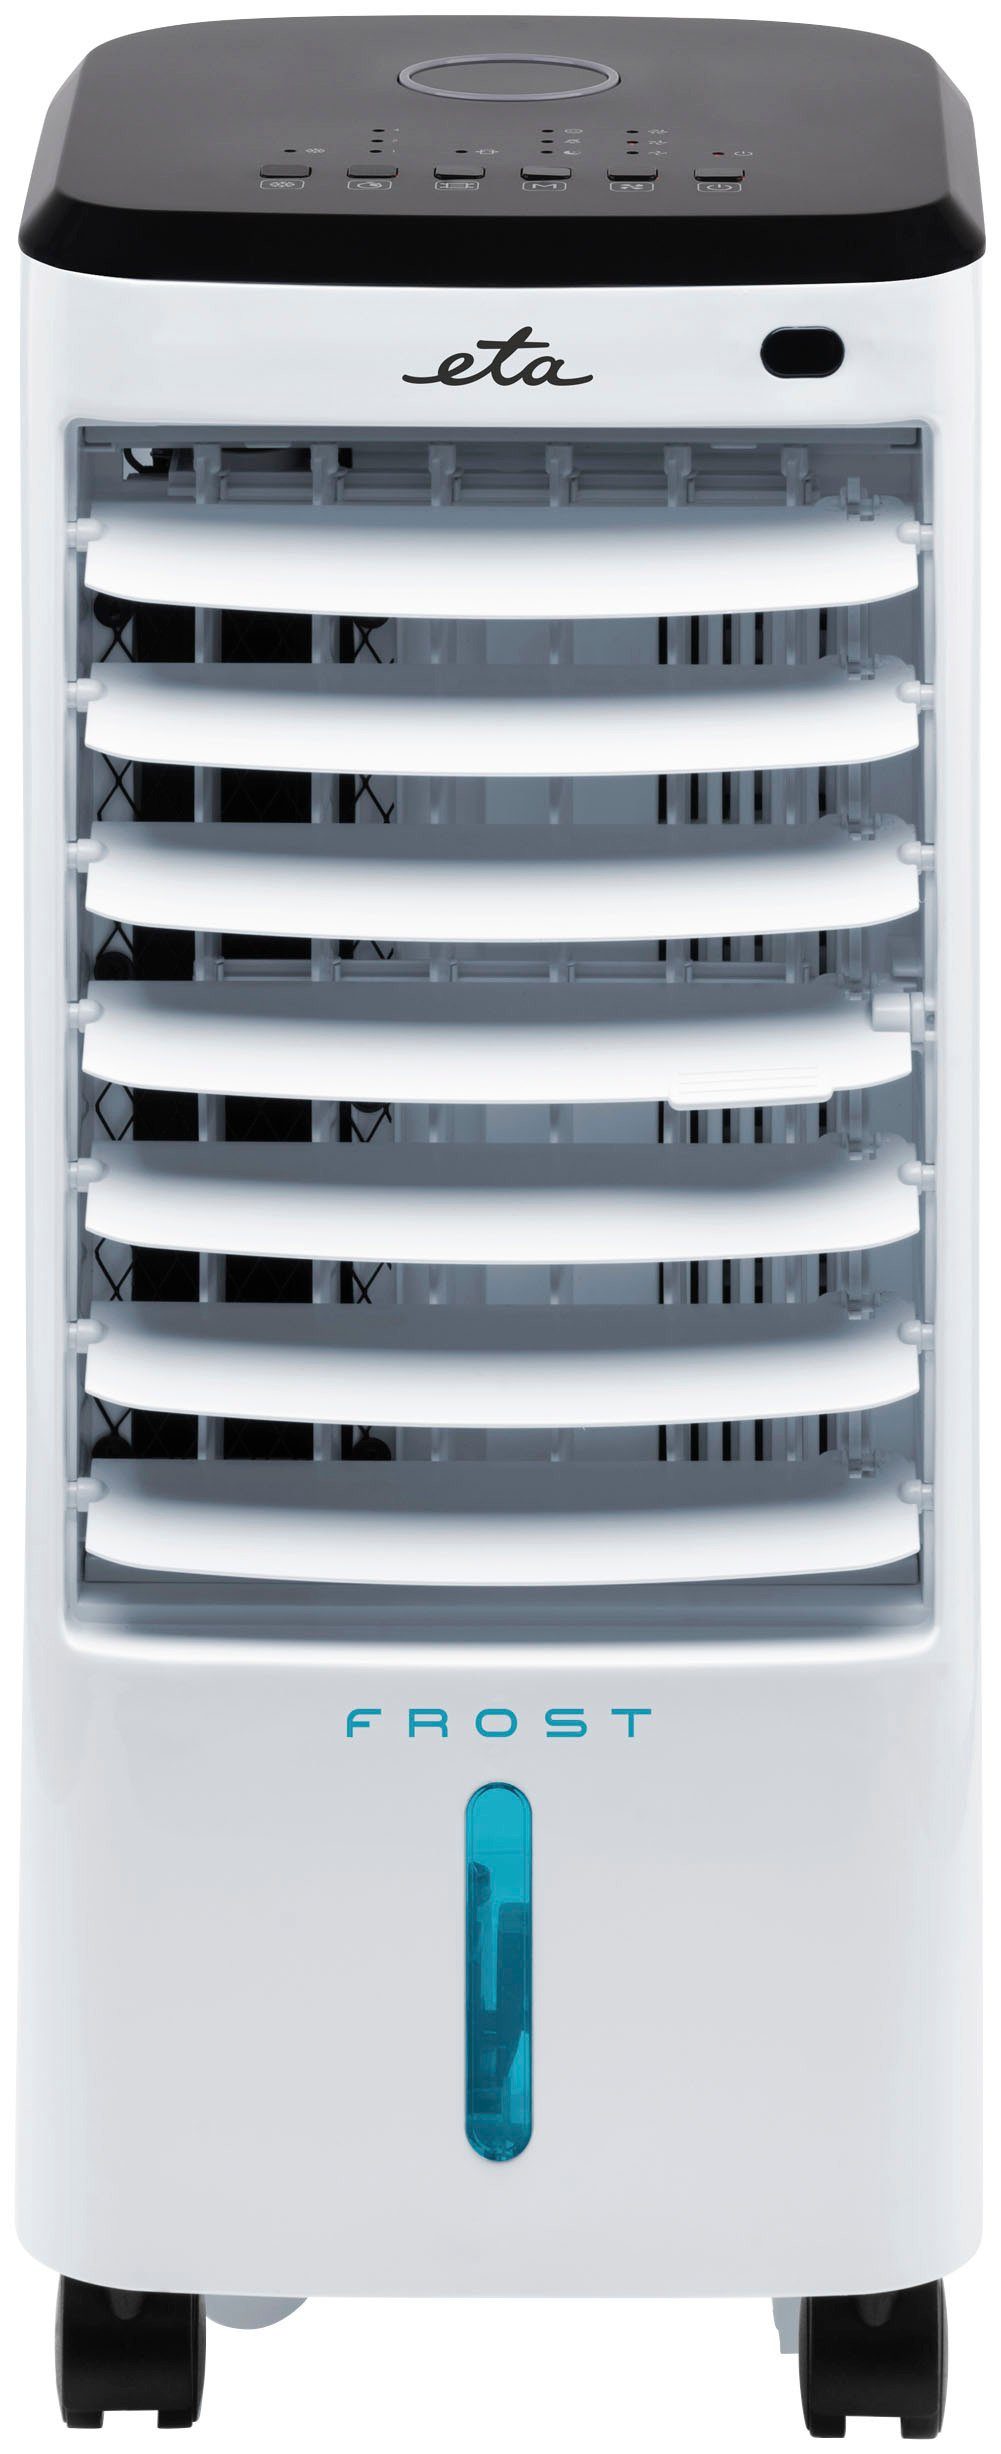 "Frost", Fassungsvermögen l Ventilatorkombigerät 3-in-1 eta Befeuchter/Ventilator/Kühler Luftkühler, 3,5